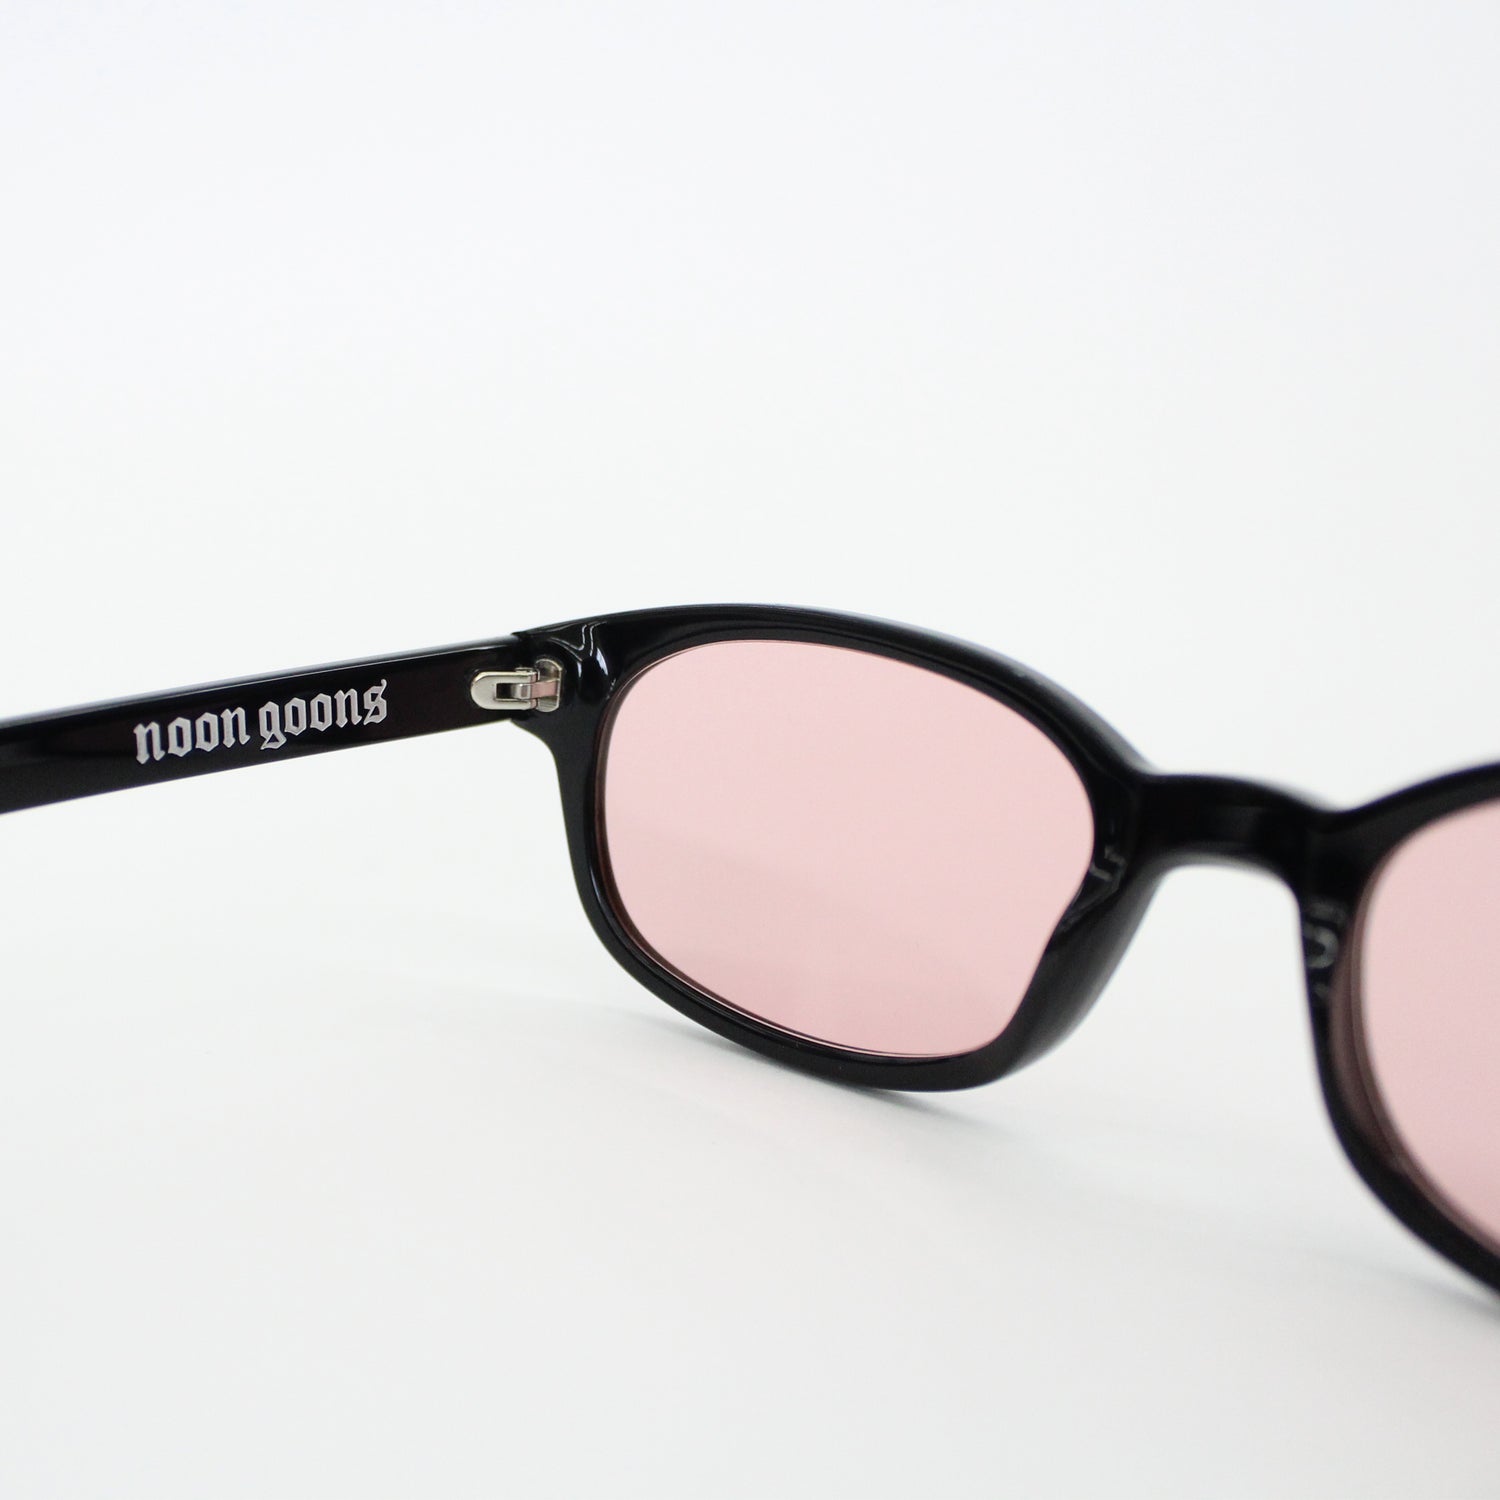 Unibase Glasses - Rose